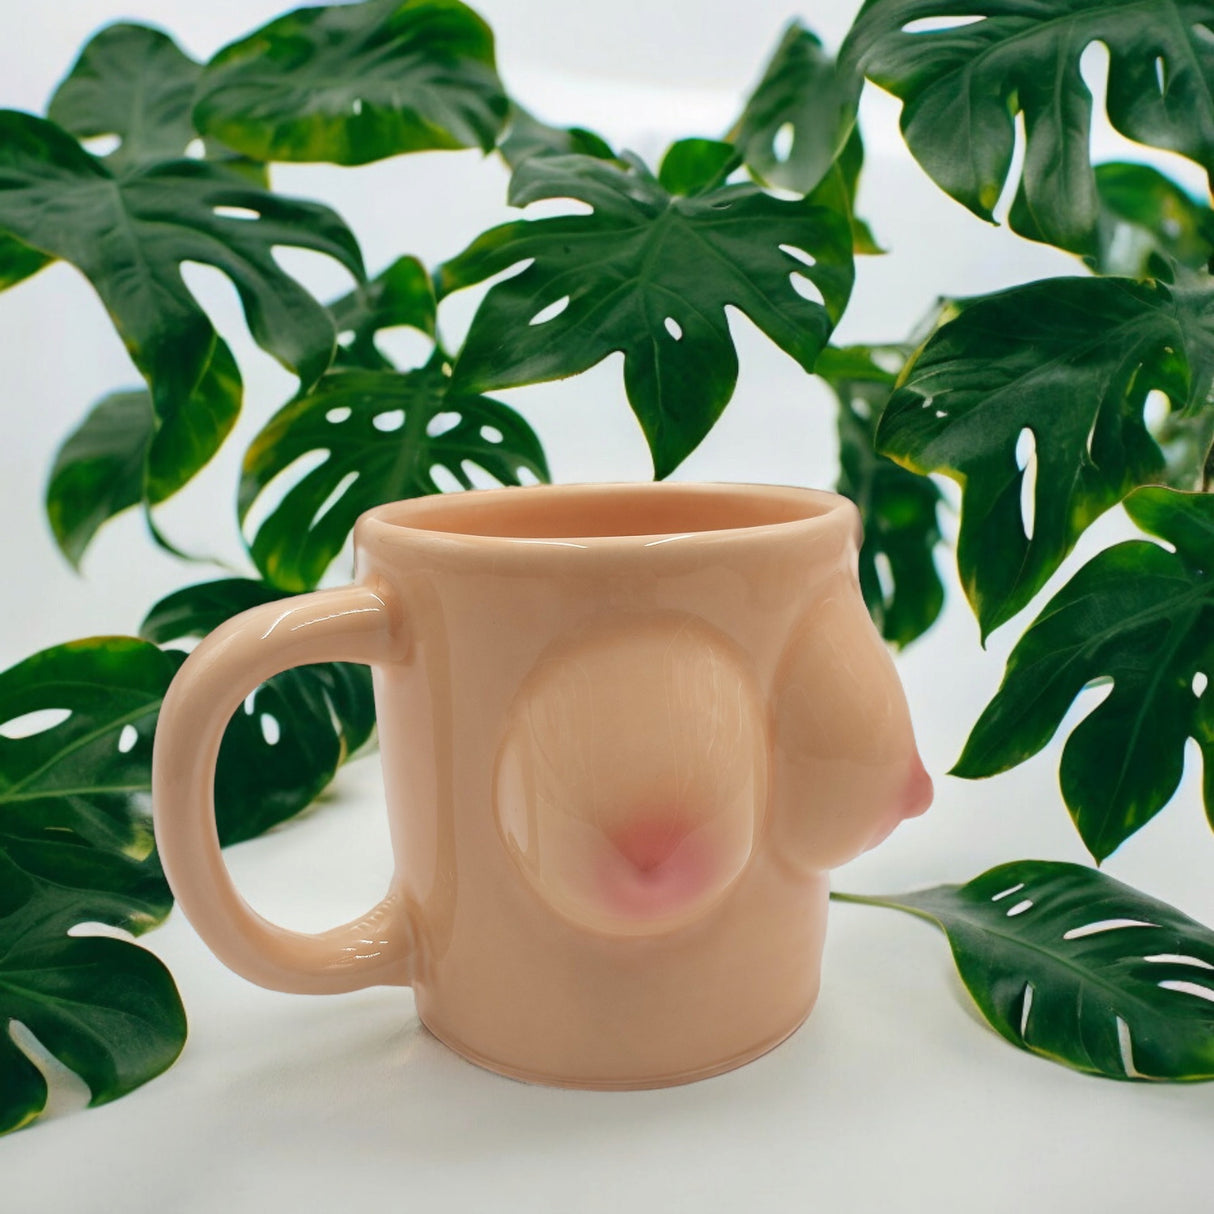 Brüste Kaffeebecher Titten Tasse mit abnehmbaren Bikinitop